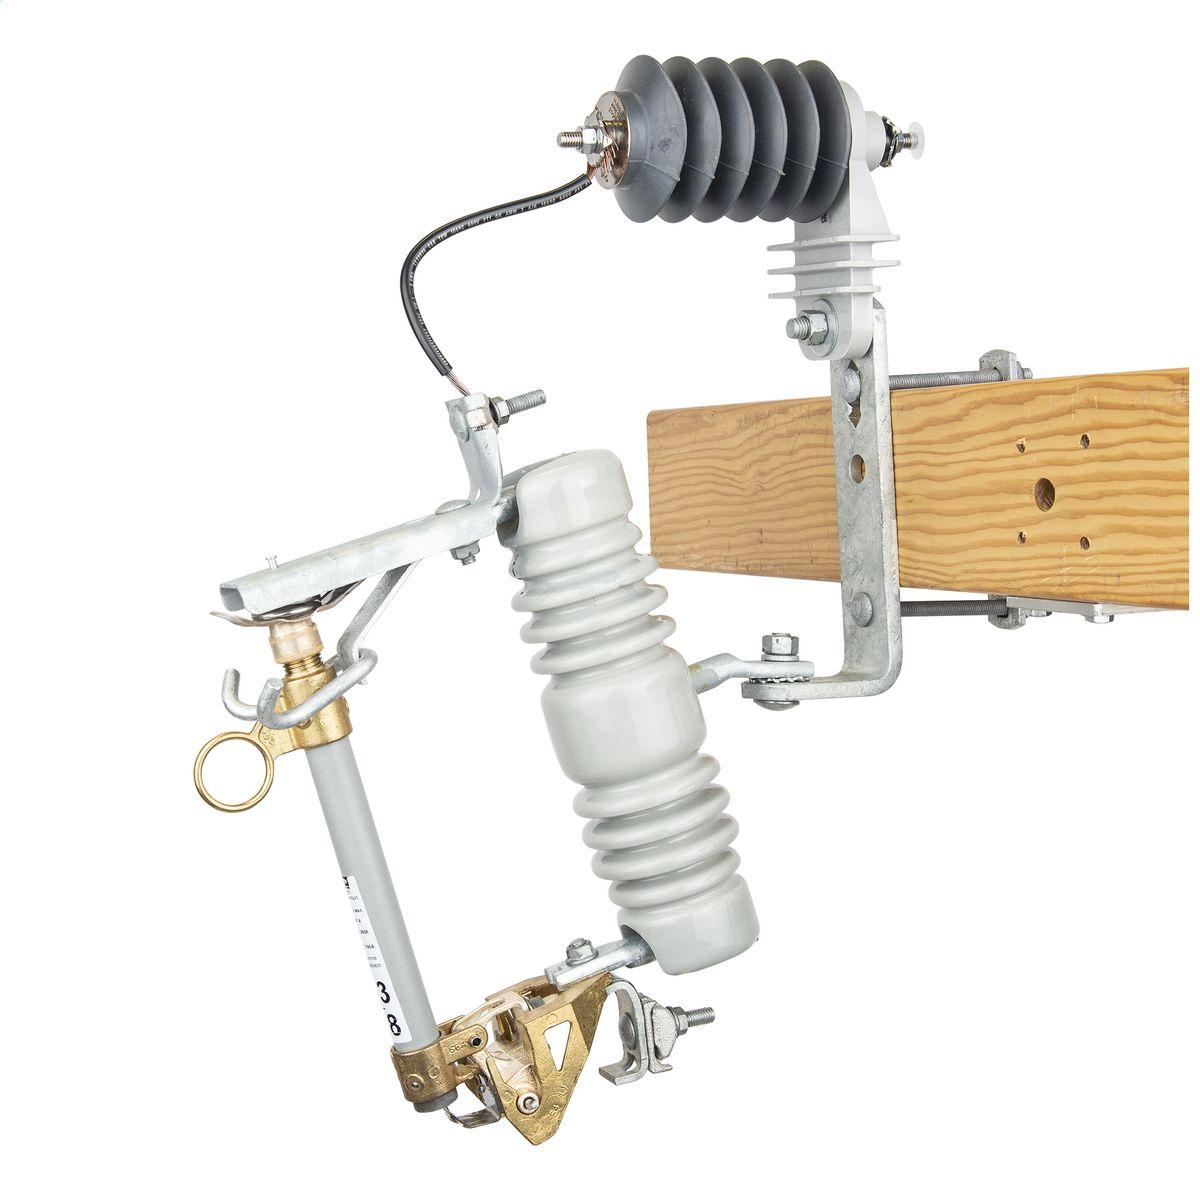 Hubbell C71DL143EBM 15 kV, 110 kV BIL, Standard Type C Porcelain Cutout / Arrester Combination with a 200A, 12kAIC fuseholder, small eyebolt connector and a NEMA "B" crossarm bracket. 